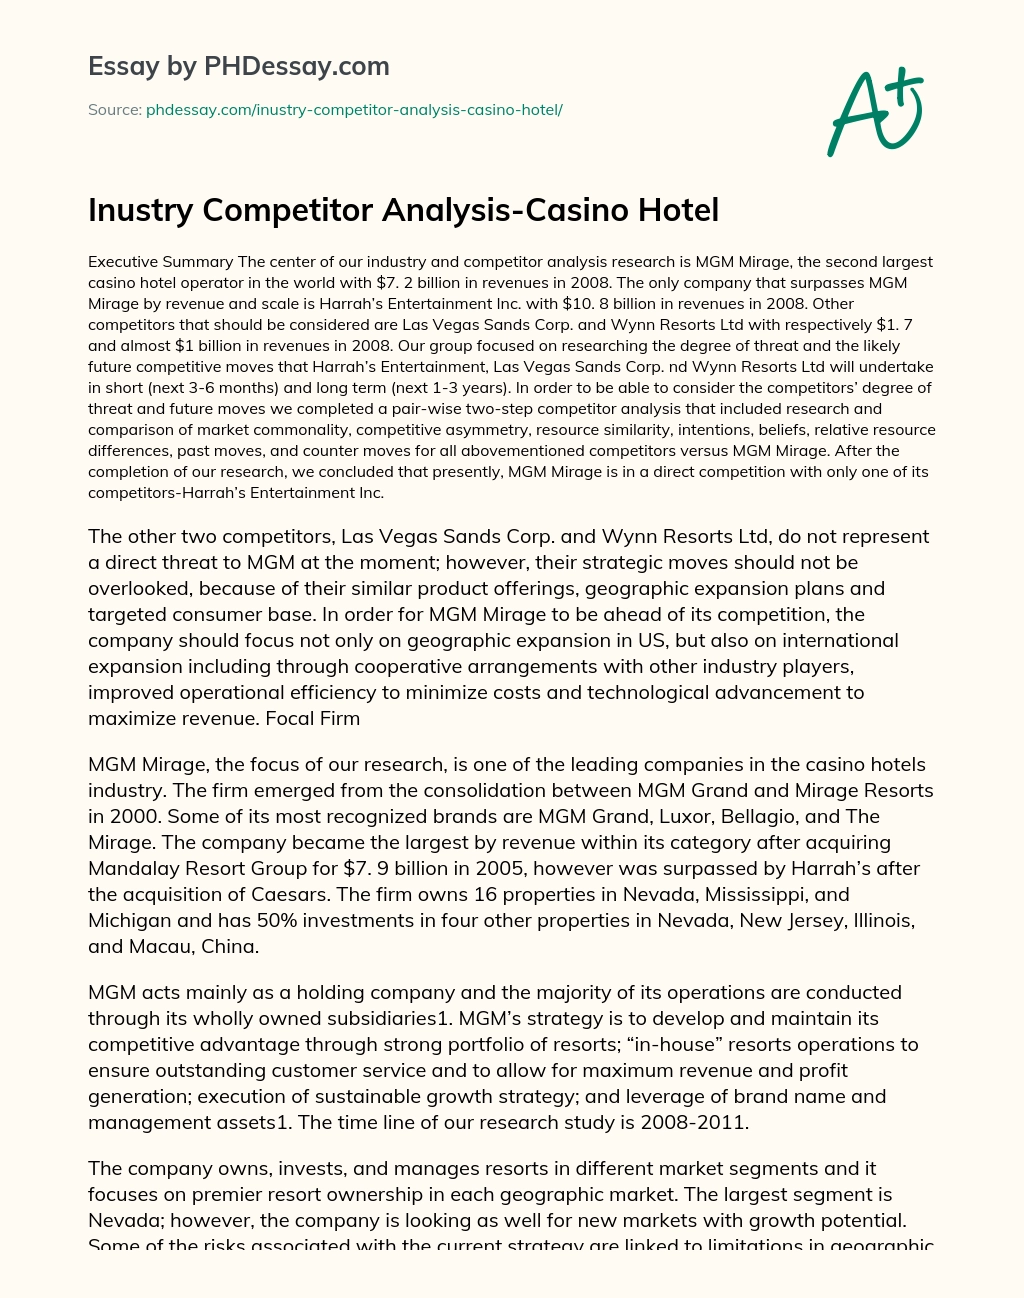 Inustry Competitor Analysis-Casino Hotel essay